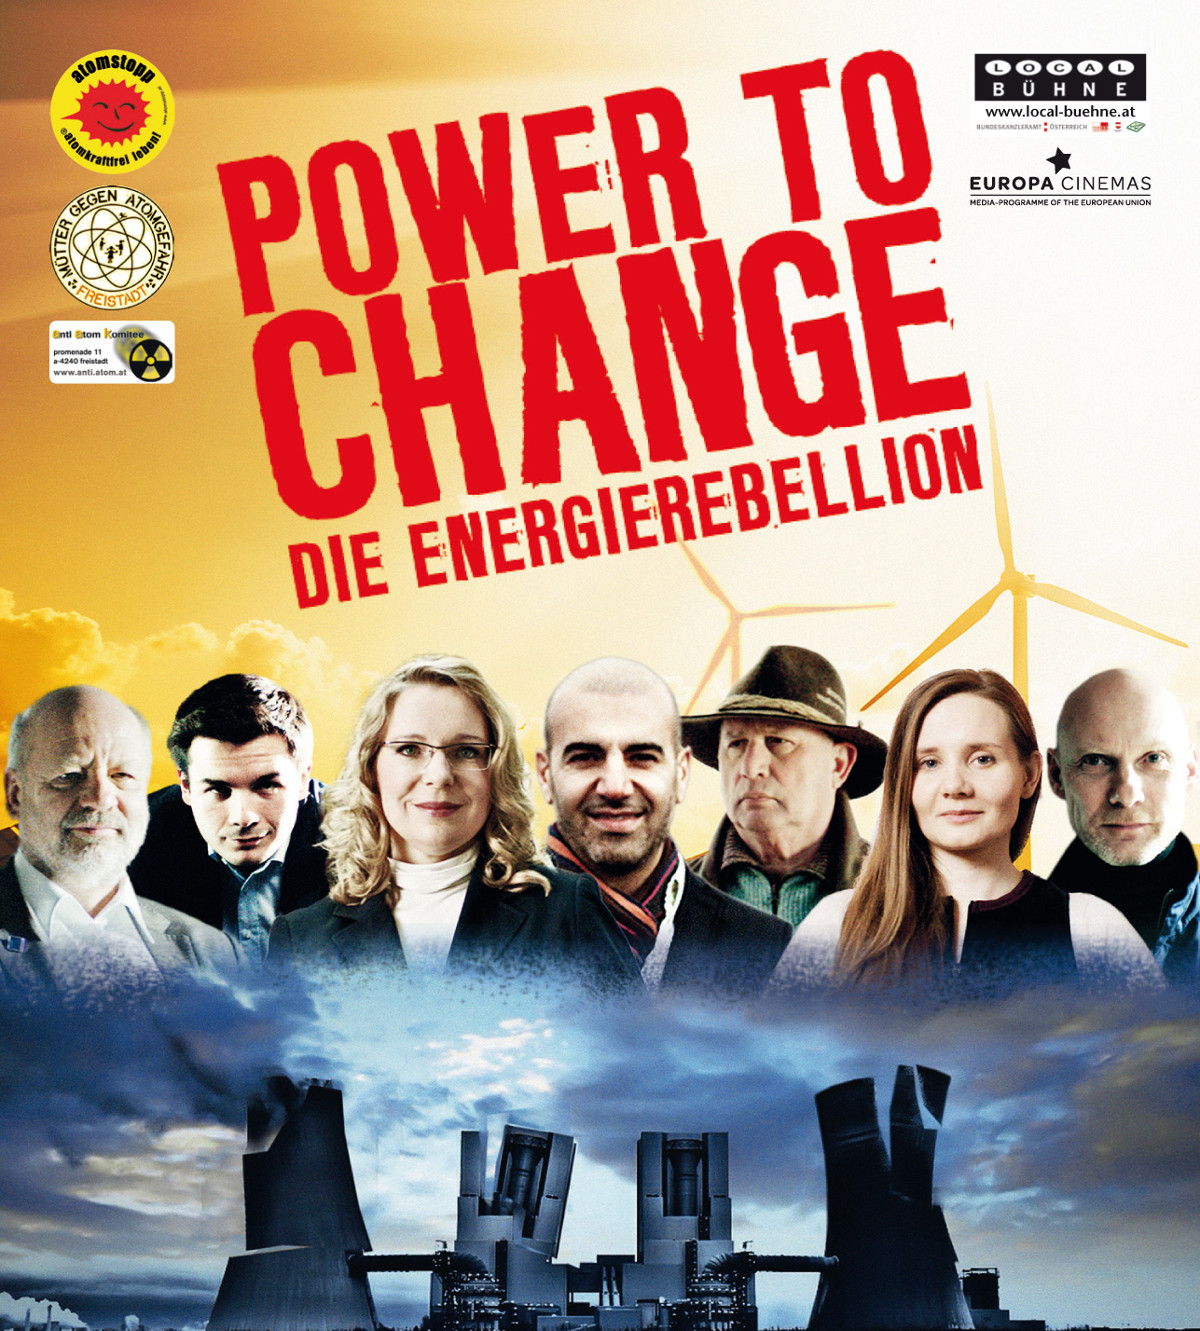 Power to change – Die Energierebellion